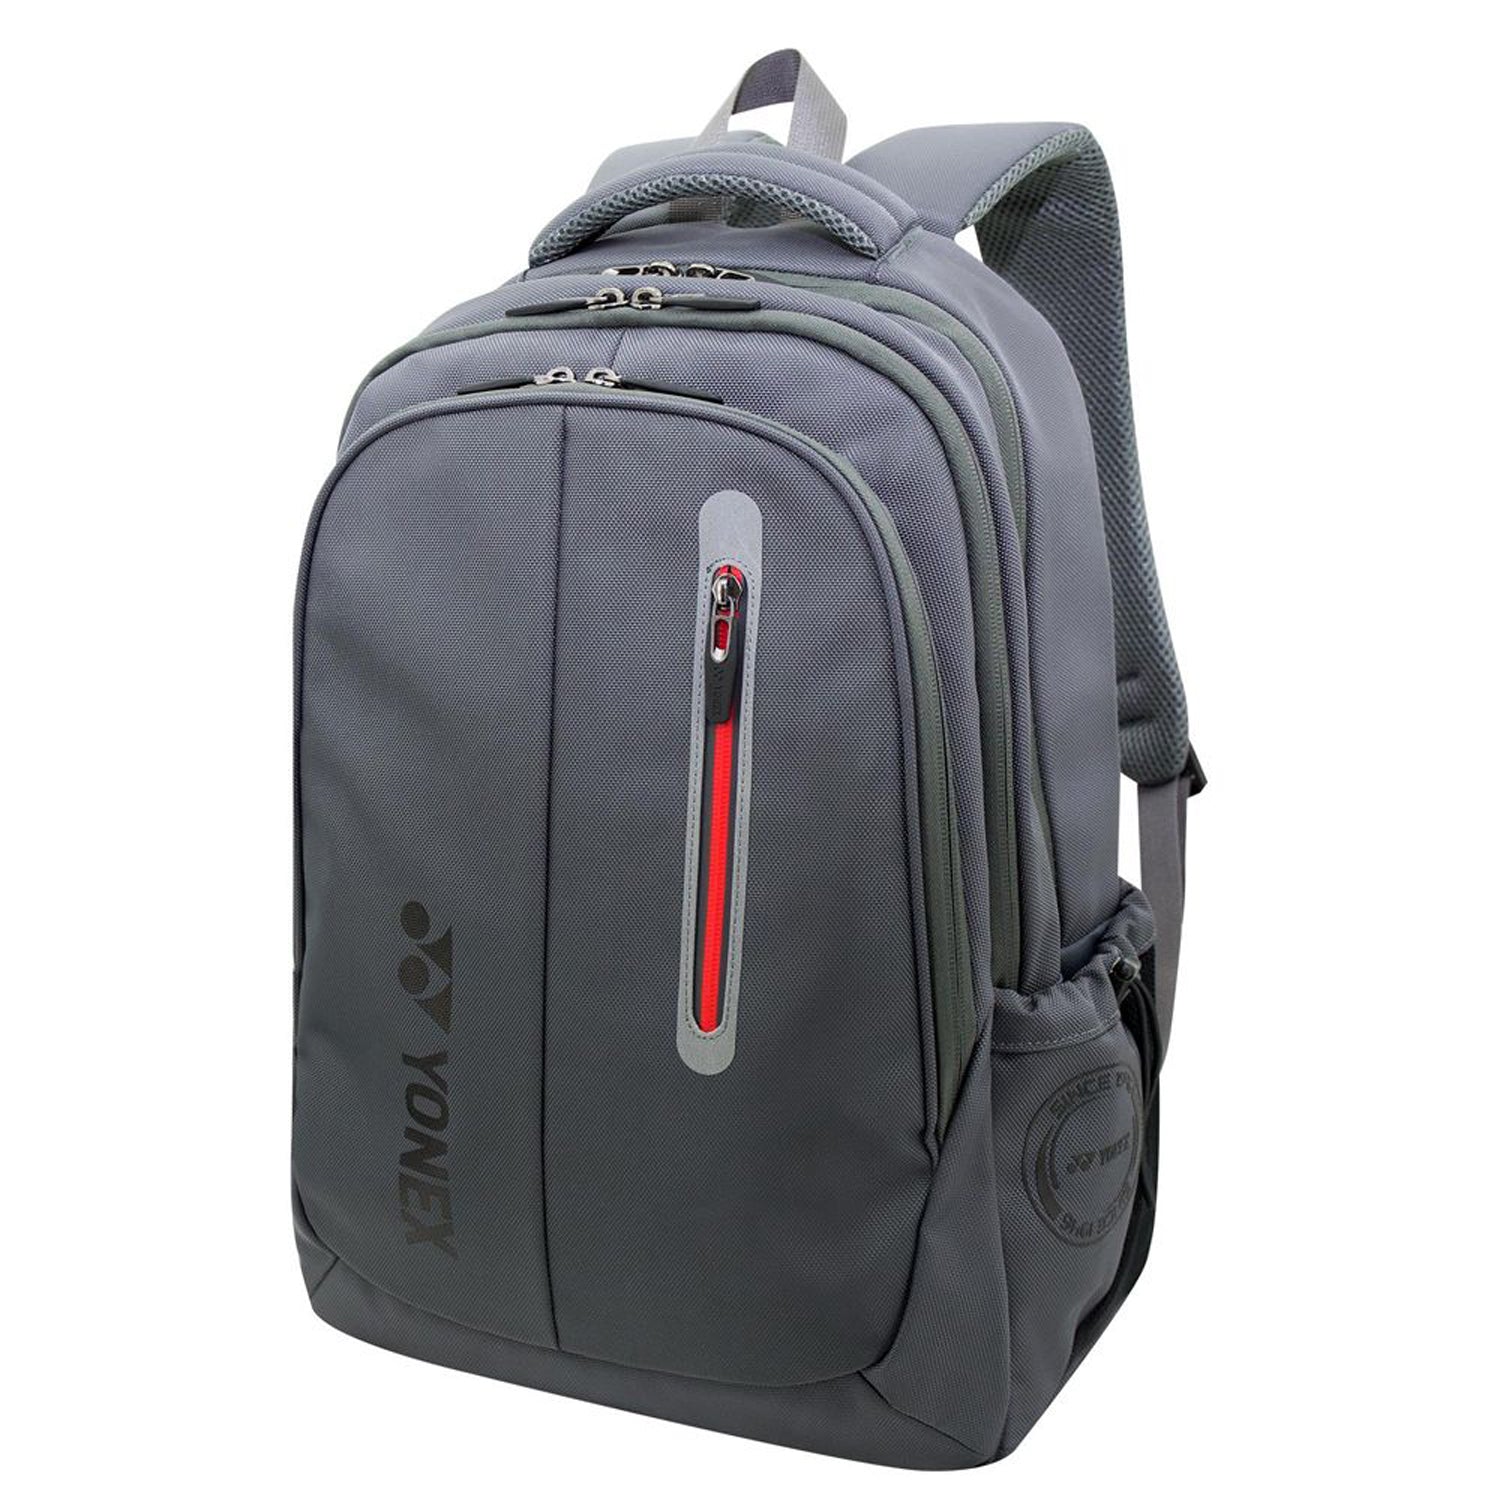 Yonex SUNR H03AO-S Backpack, Gray - Best Price online Prokicksports.com